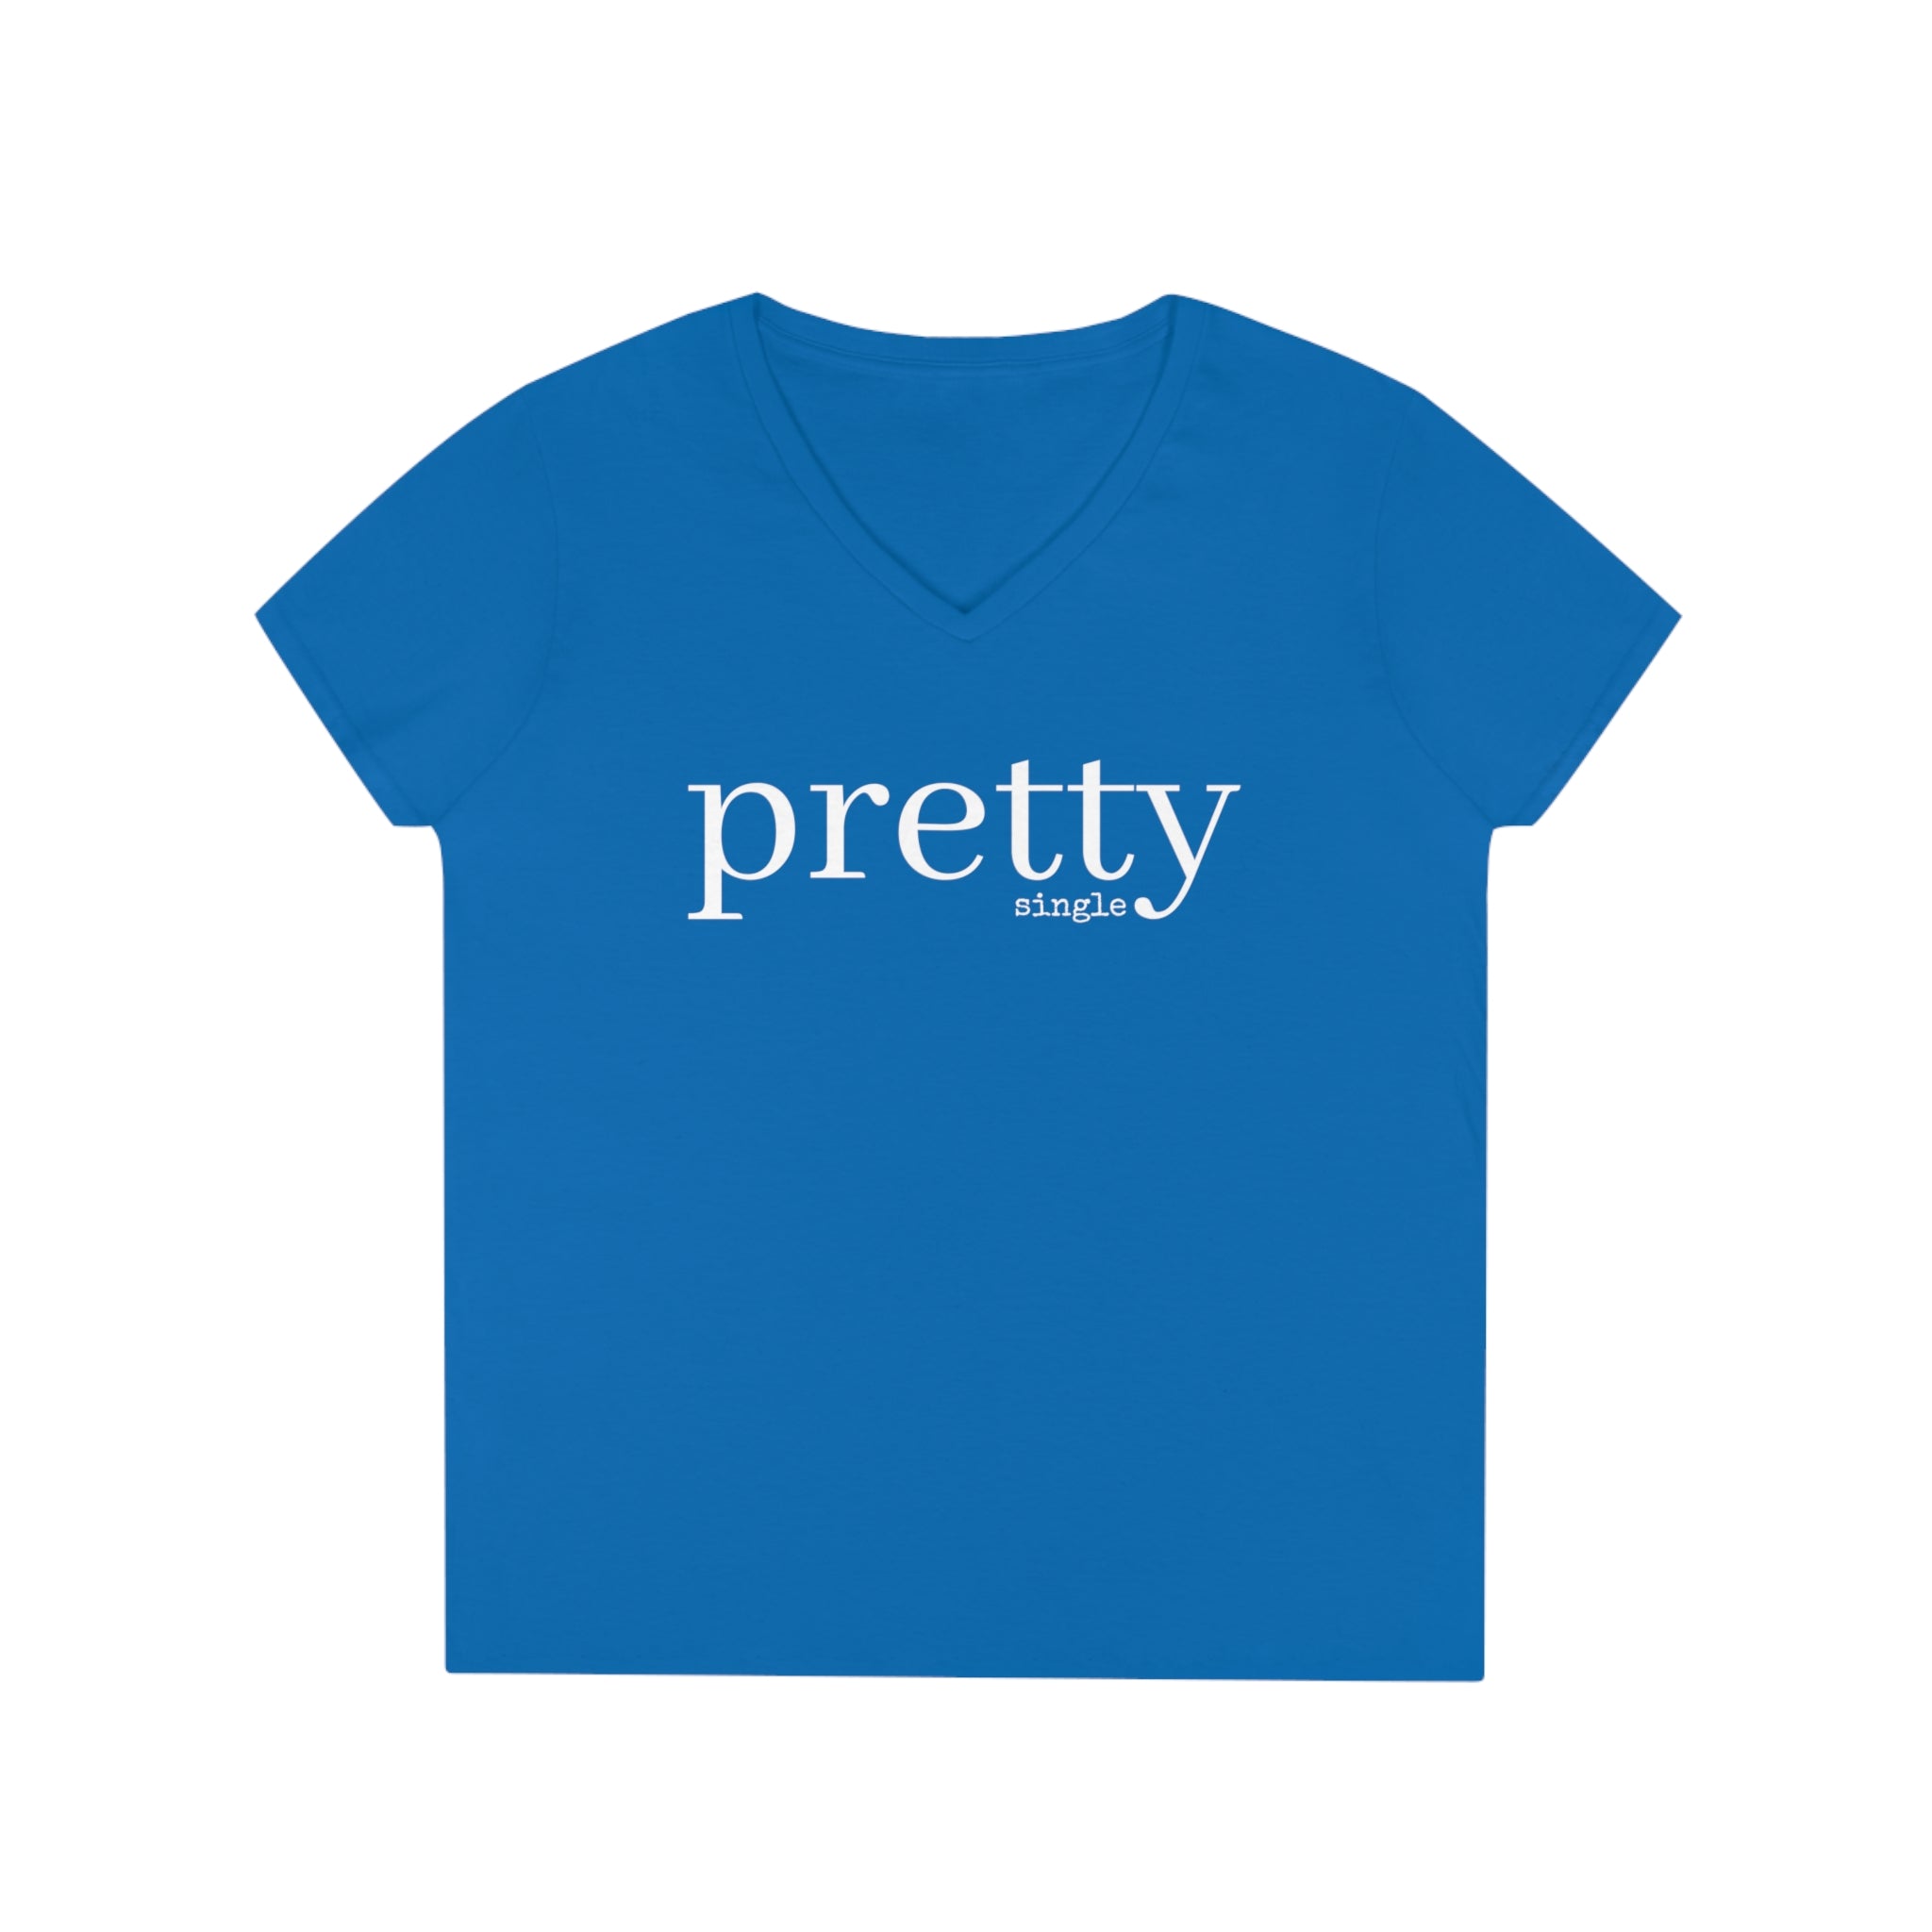 PRETTY single Women's V Neck T-shirt, Cute Graphic Tee